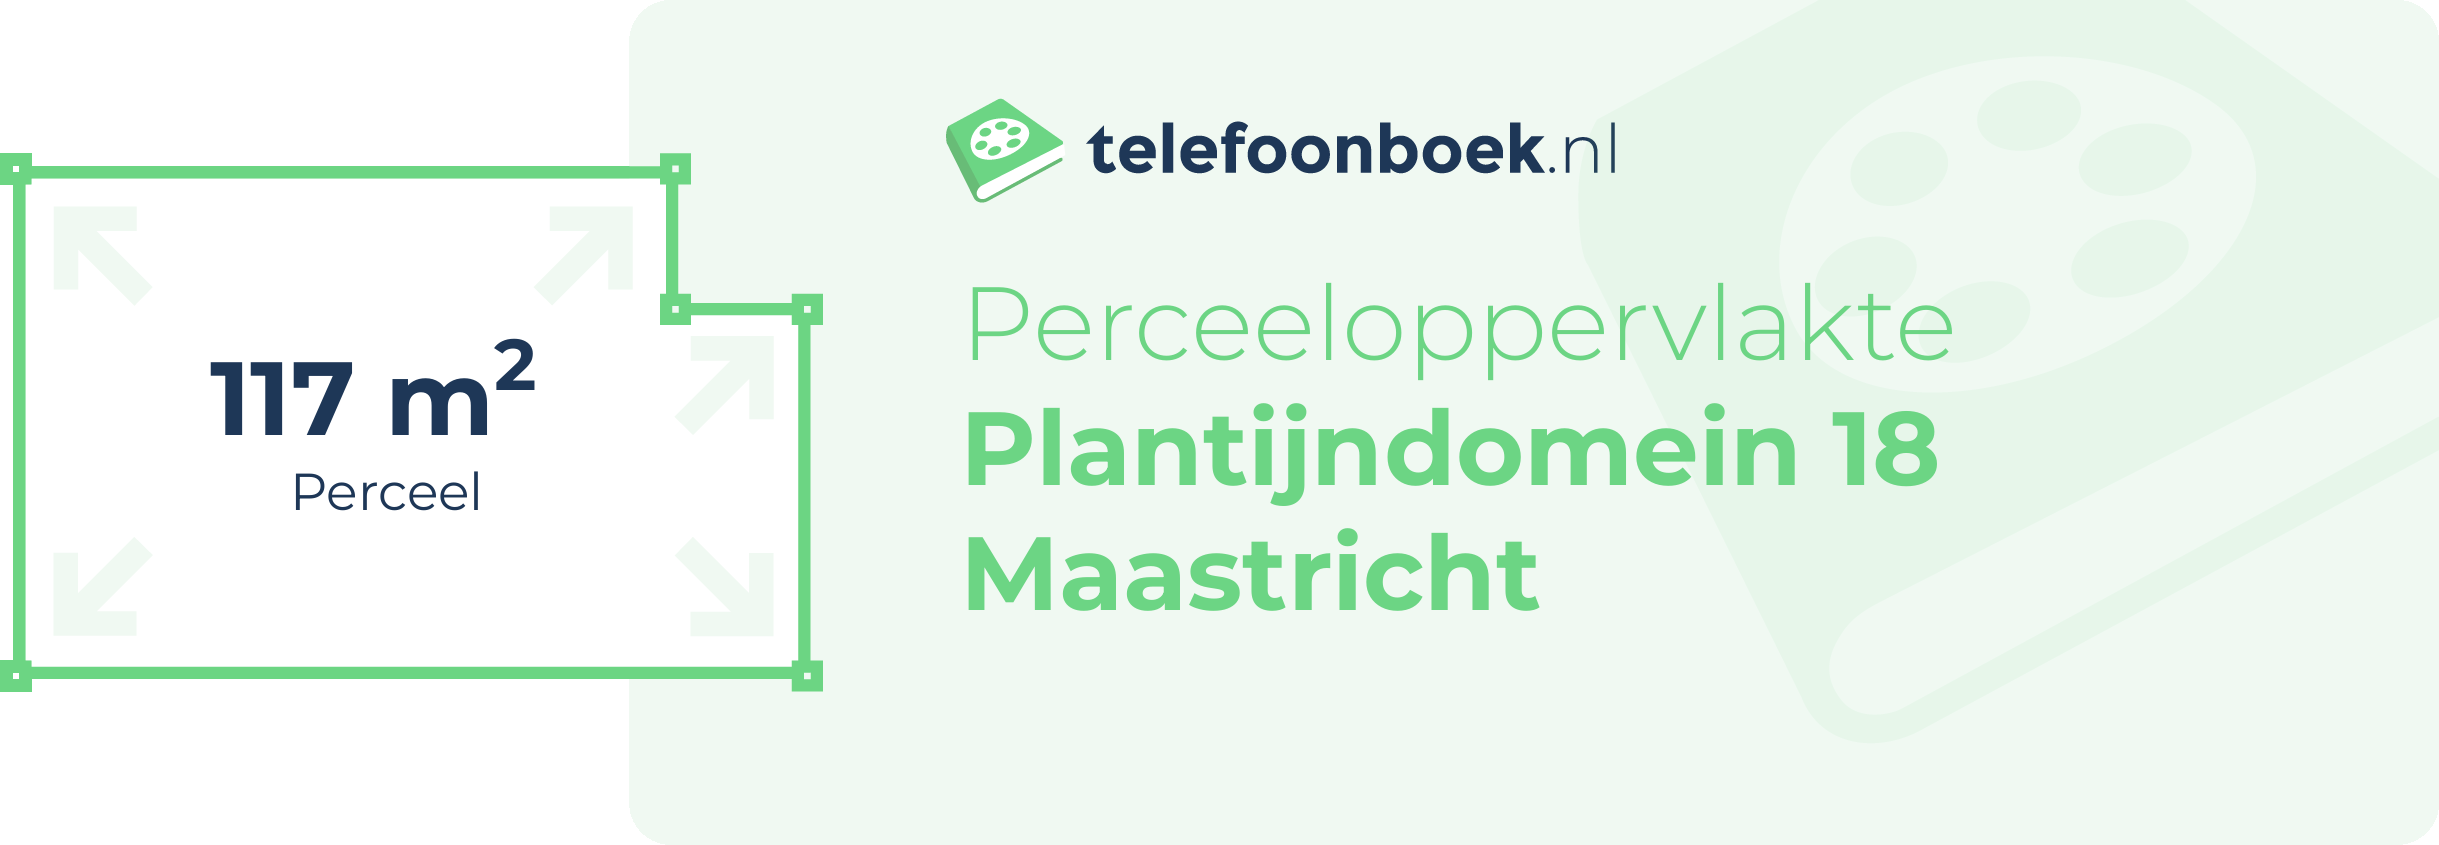 Perceeloppervlakte Plantijndomein 18 Maastricht